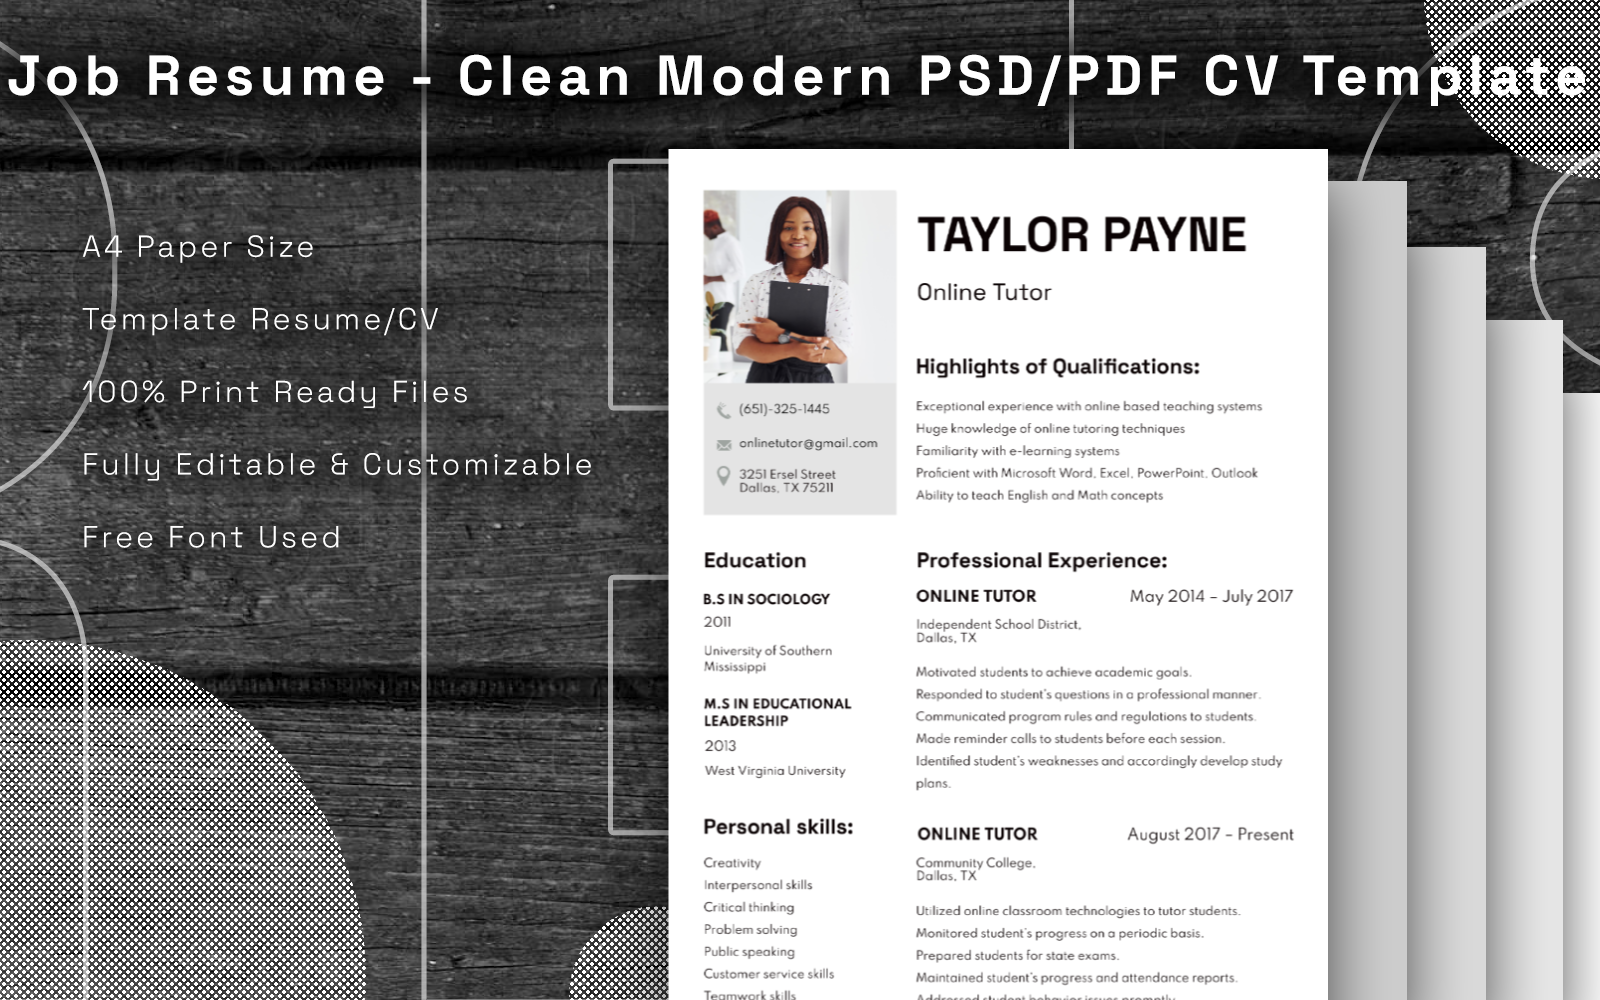 Job Resume - Clean Modern PSD/PDF CV Template